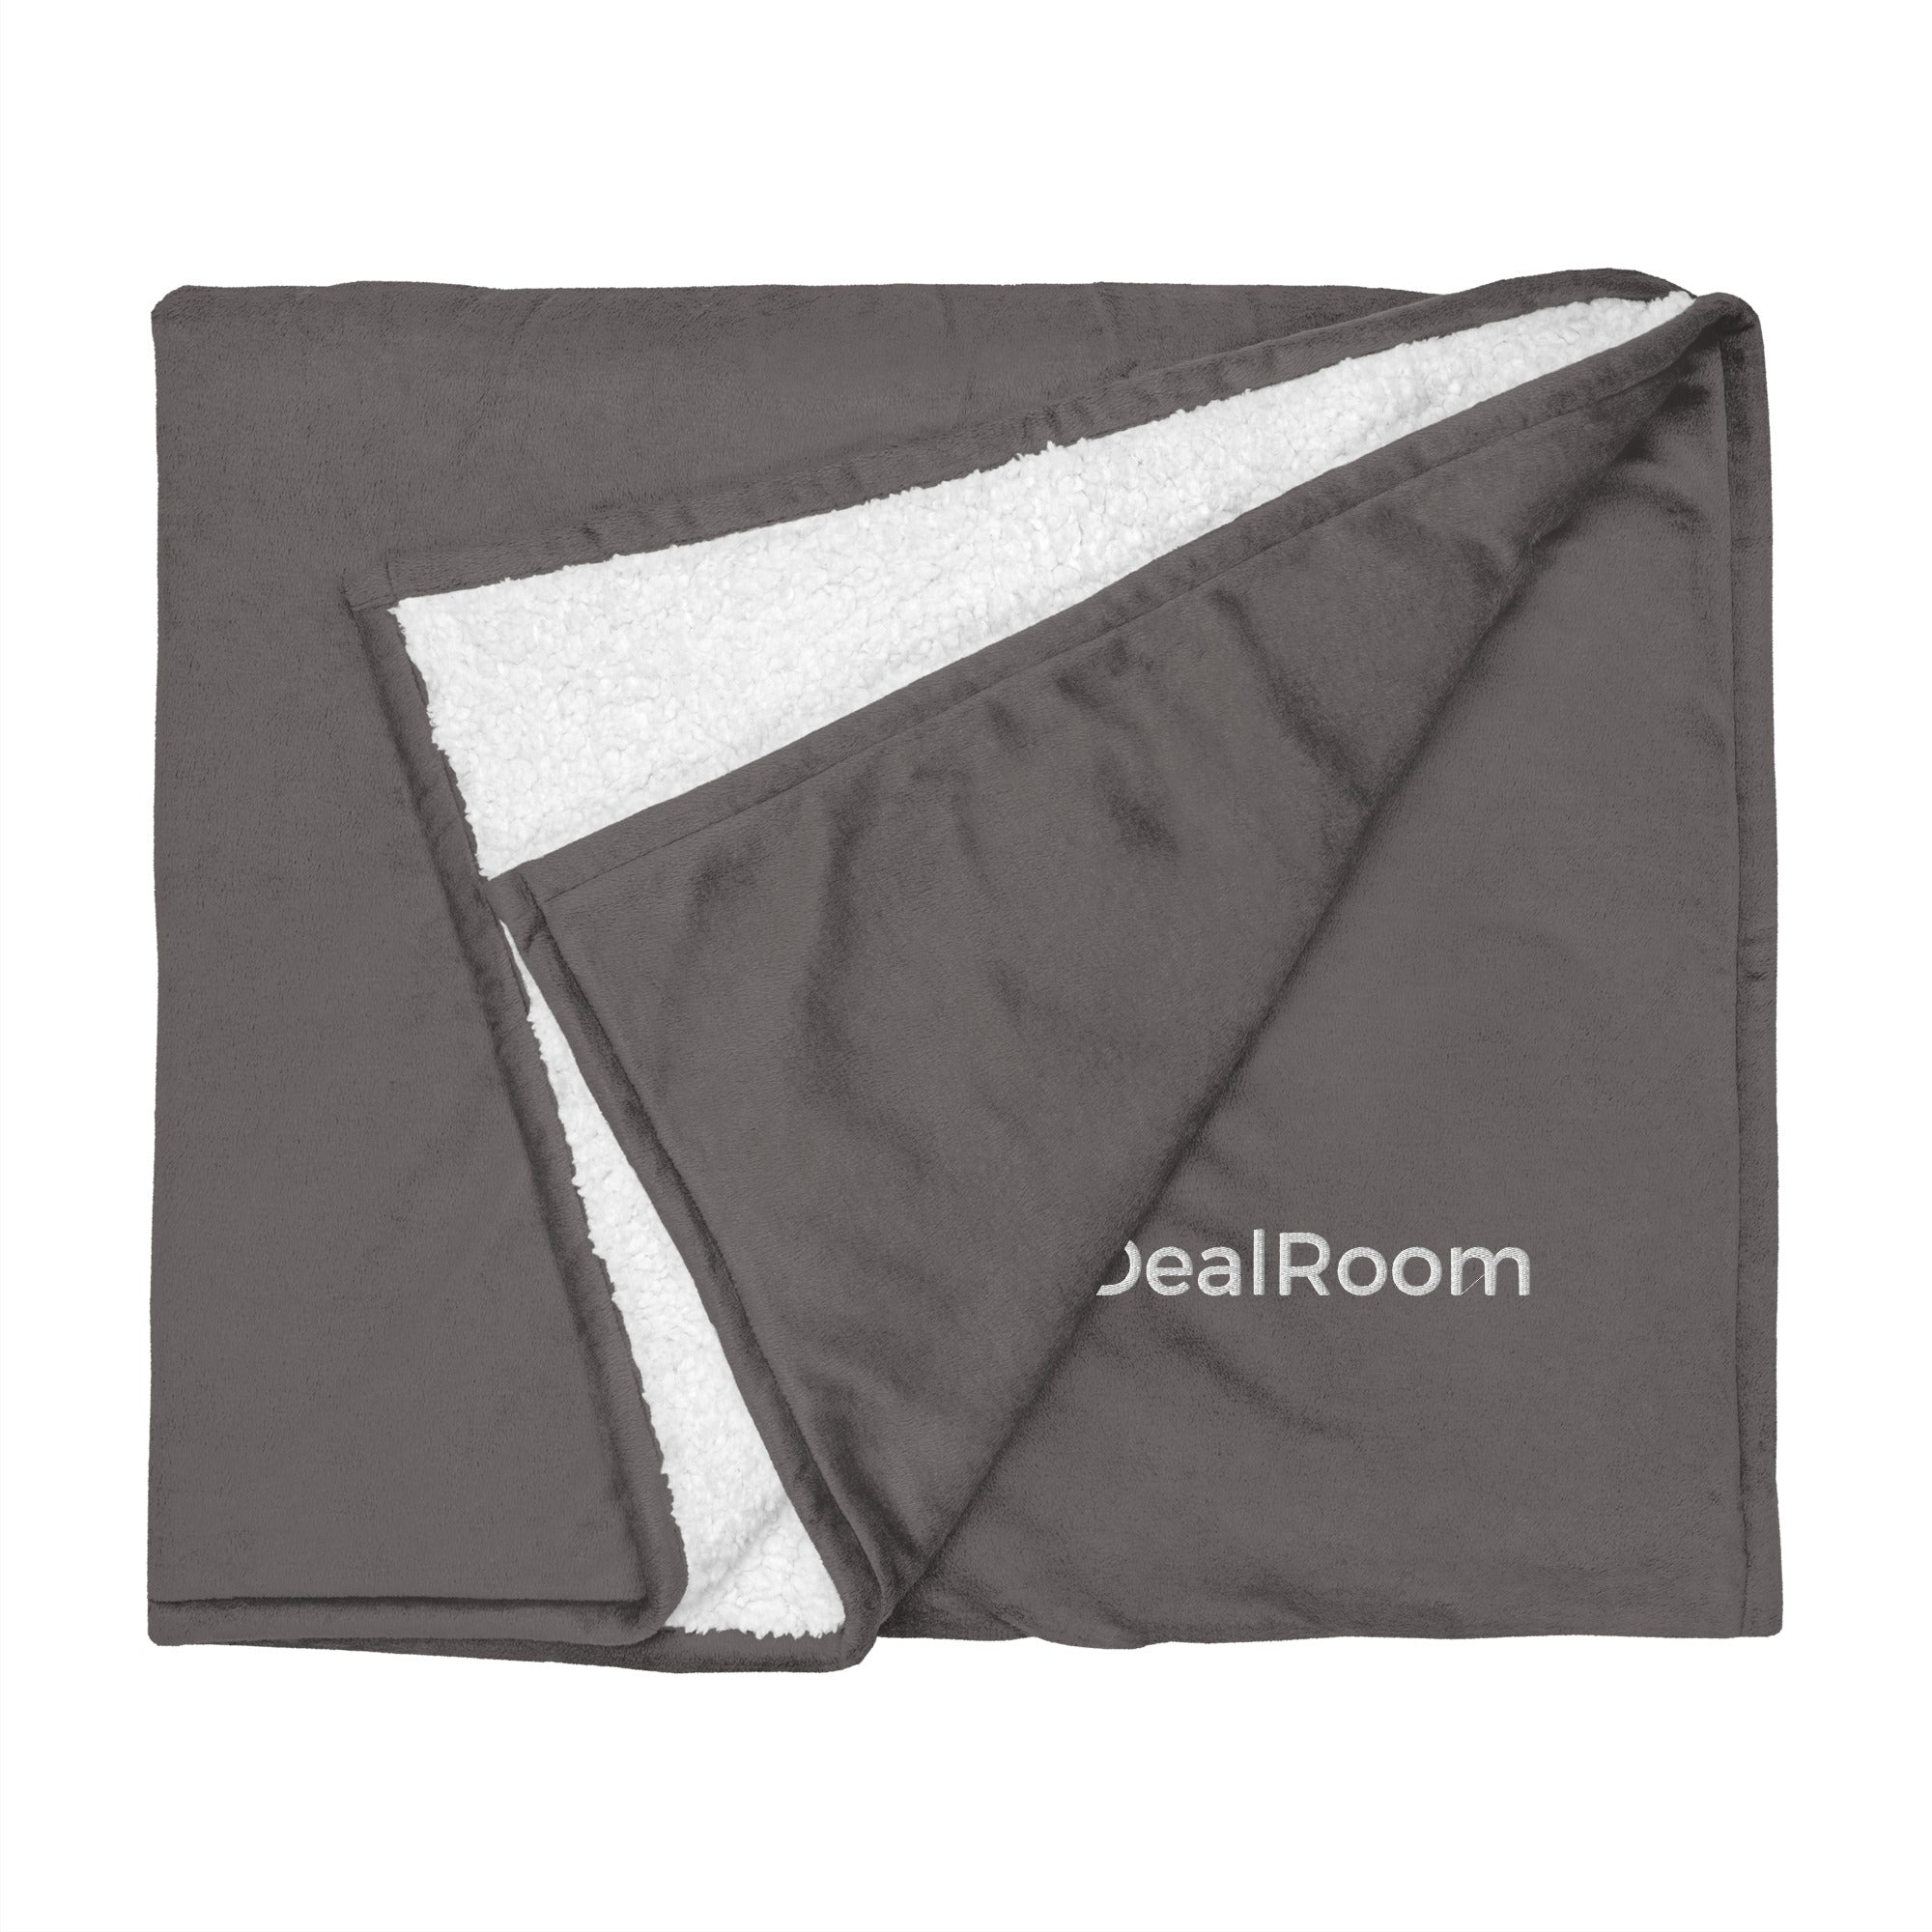 DealRoom Premium sherpa blanket